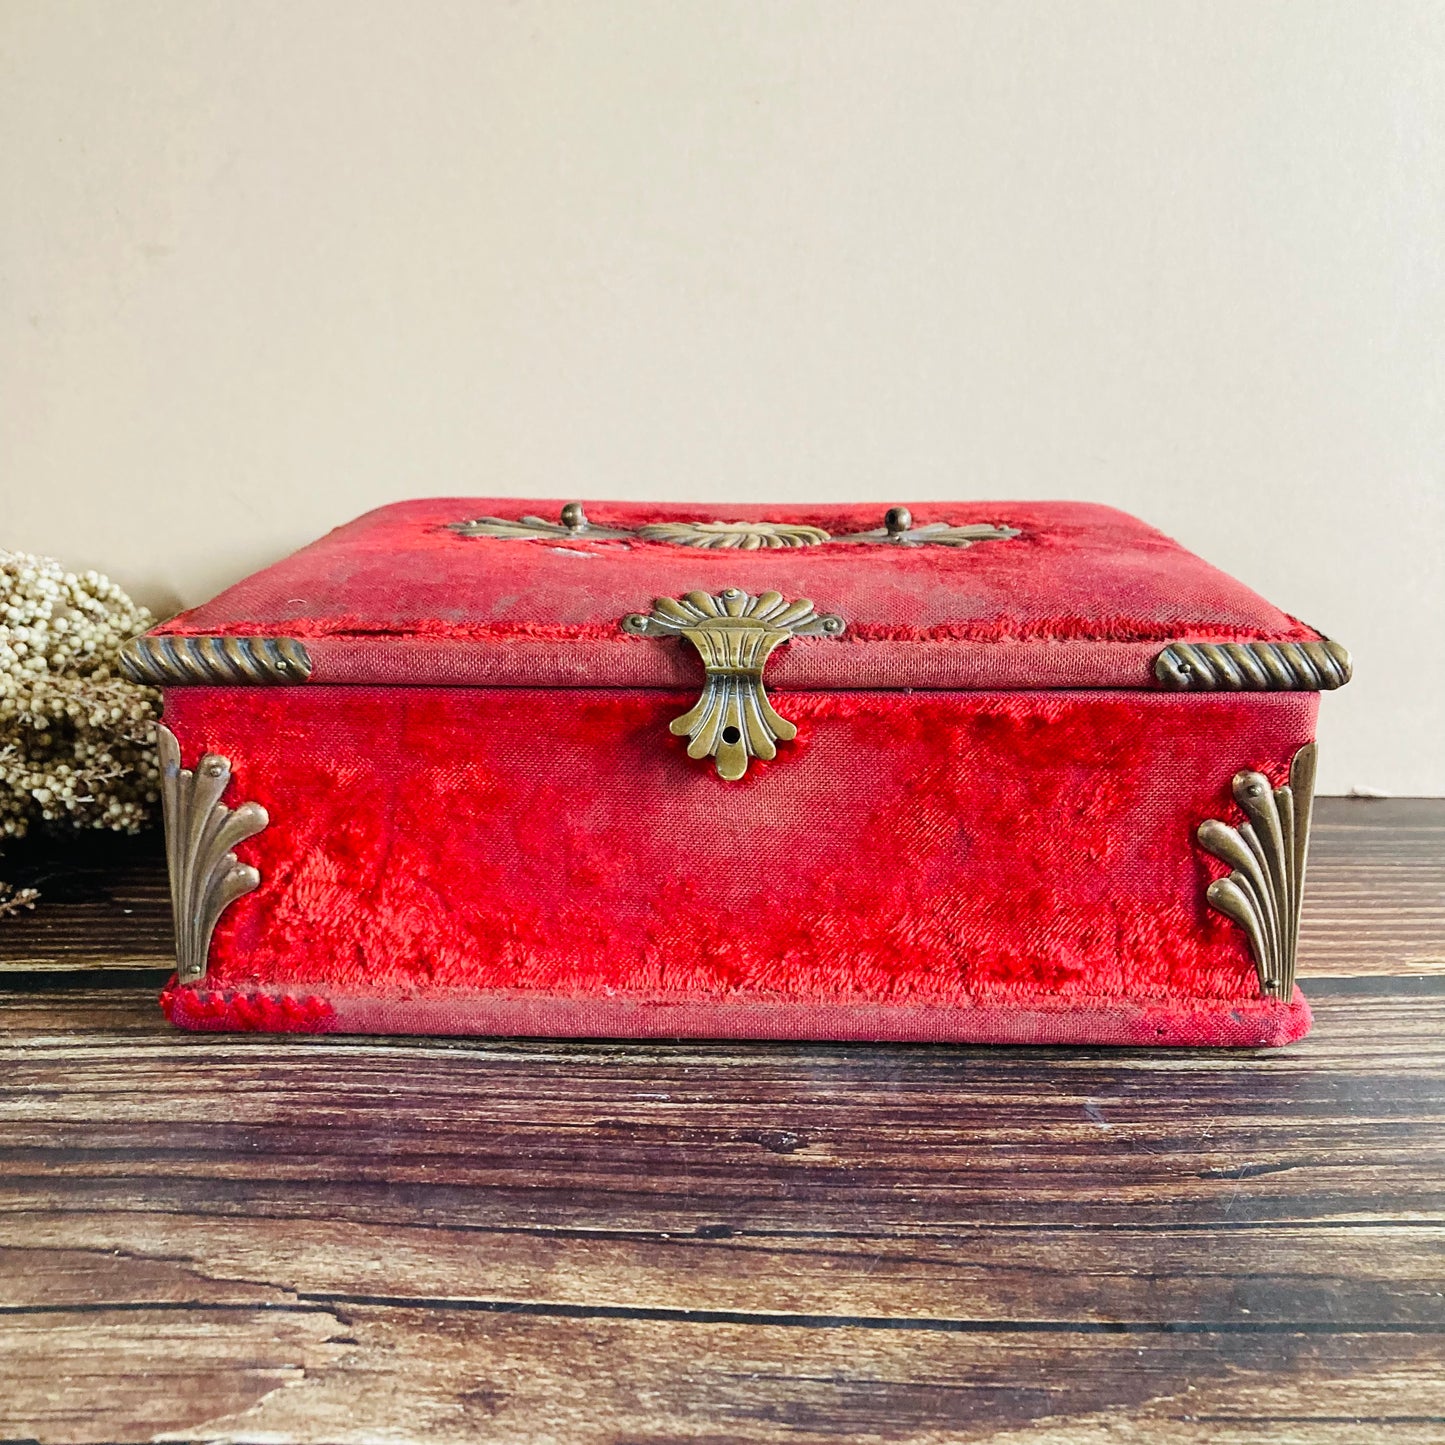 Antique French Red Velvet Jewellery Casket Box | Worn Antique Condition